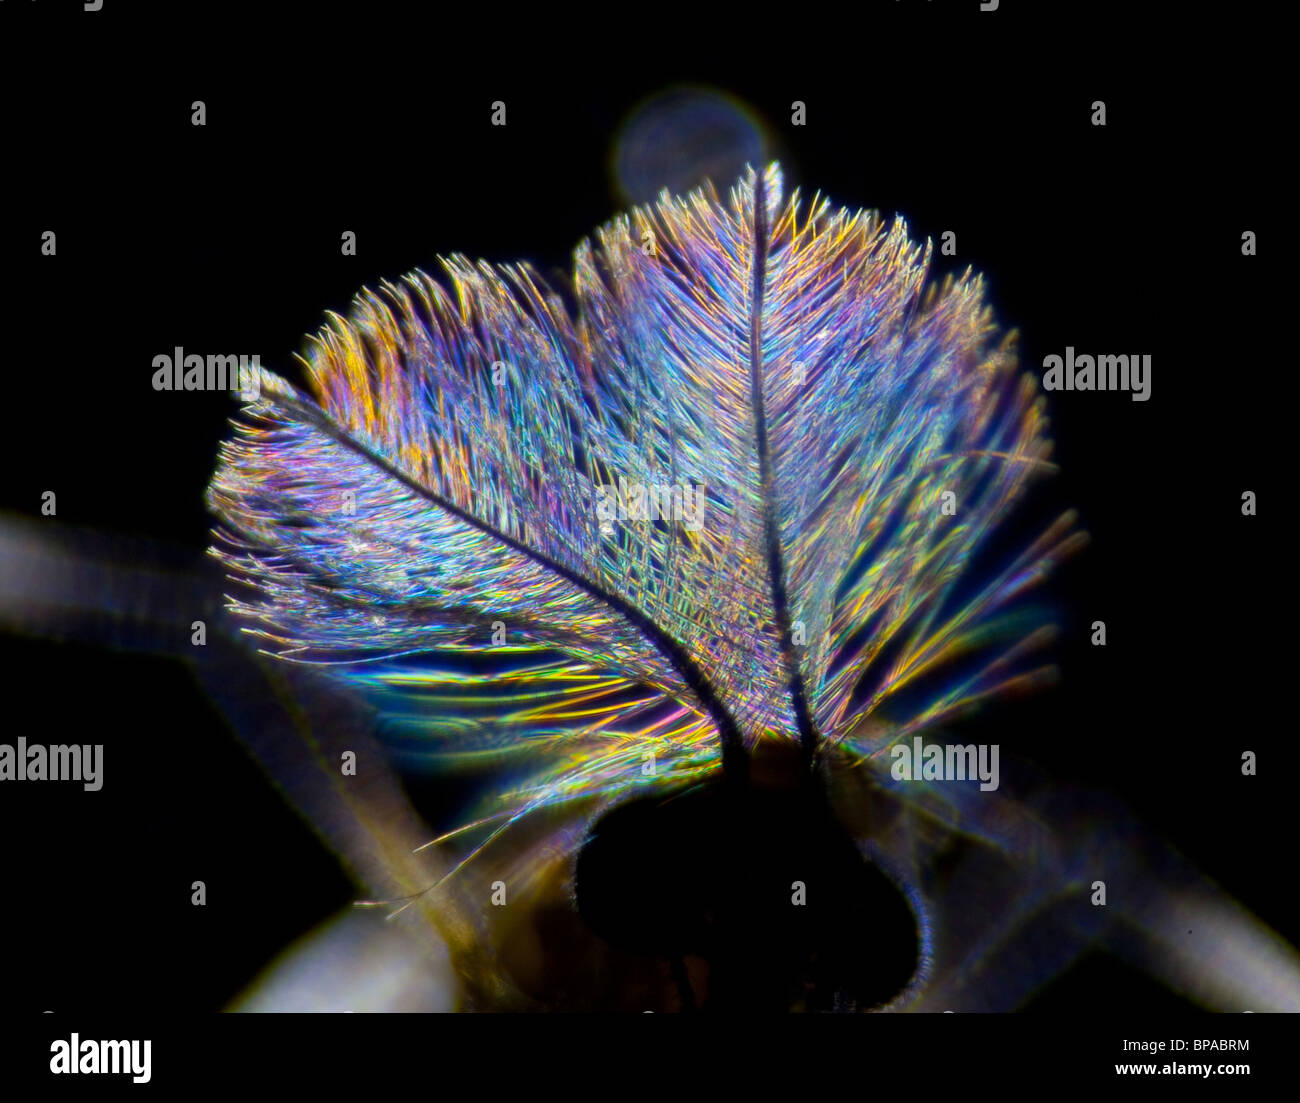 High macro close-up of midge antennae backlit showing rainbow interference patterns Stock Photo